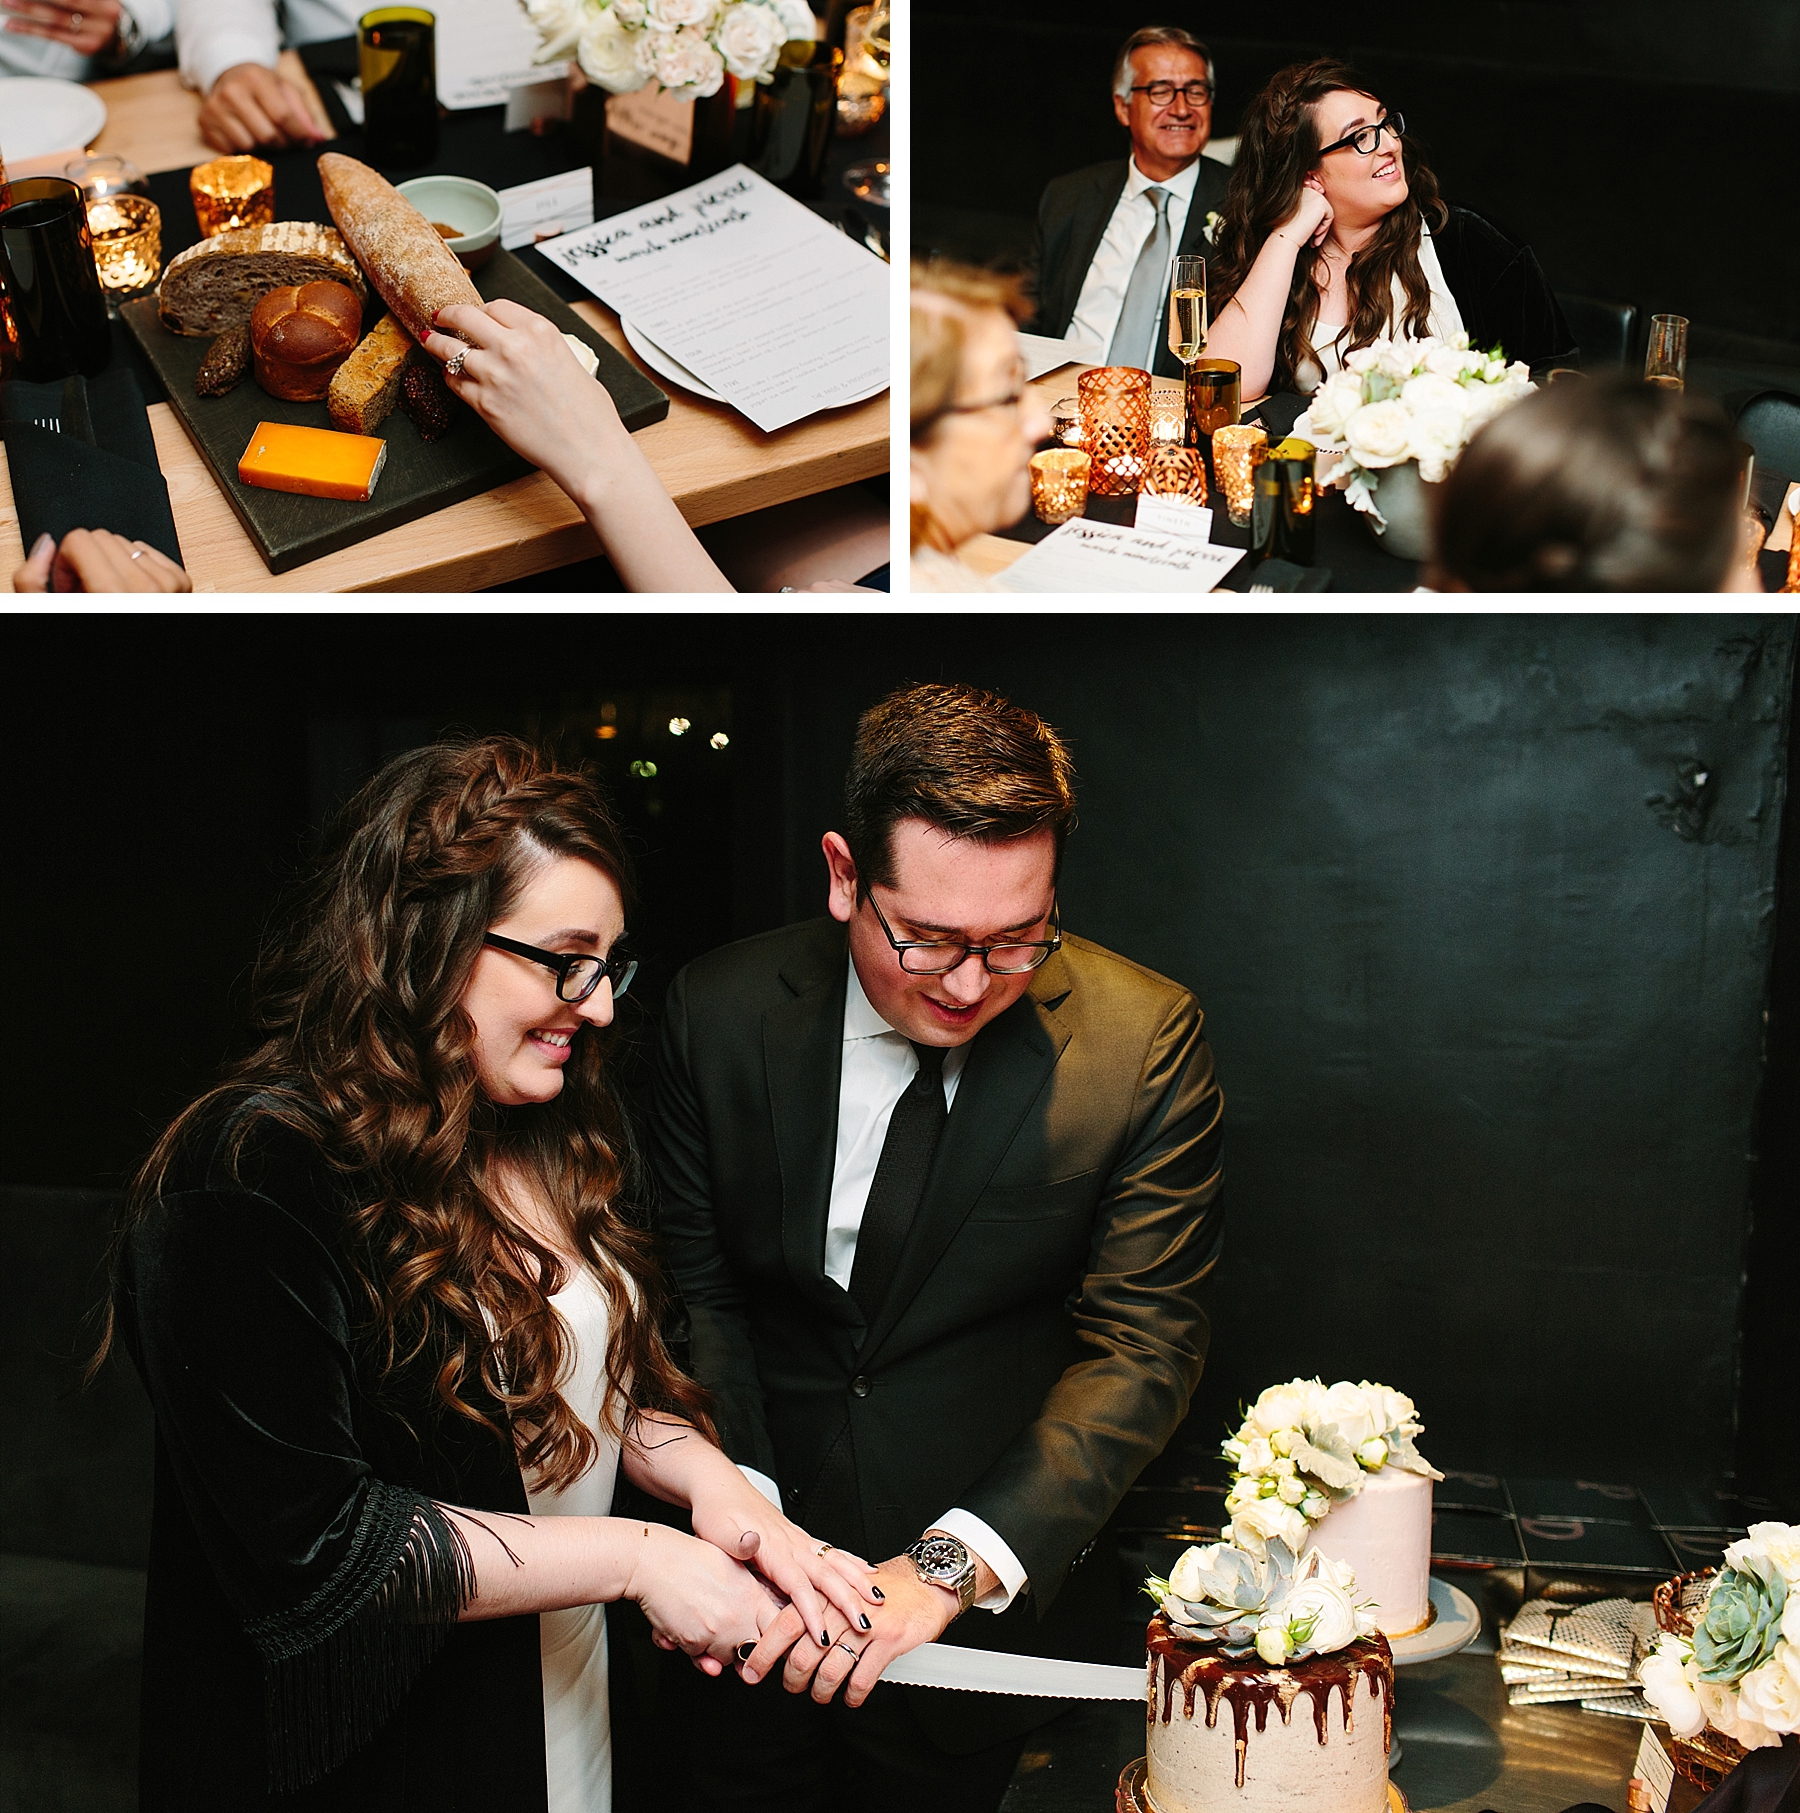 Houston Wedding reception at Pass & Provisions cutting cake